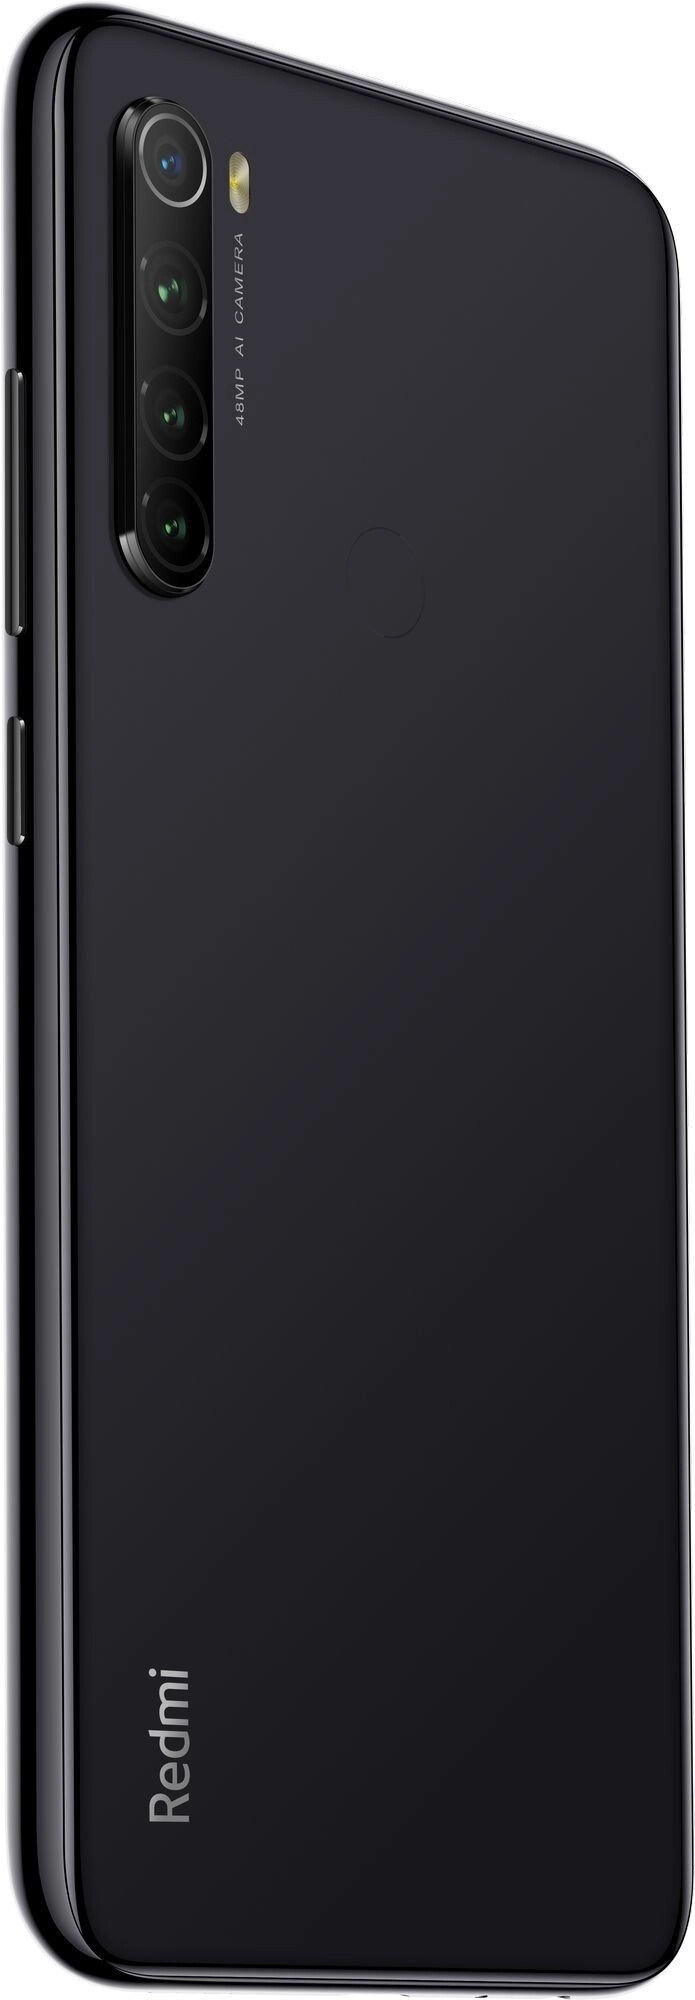 Смартфон Xiaomi Redmi Note 8 4/64Gb Space Black заказать